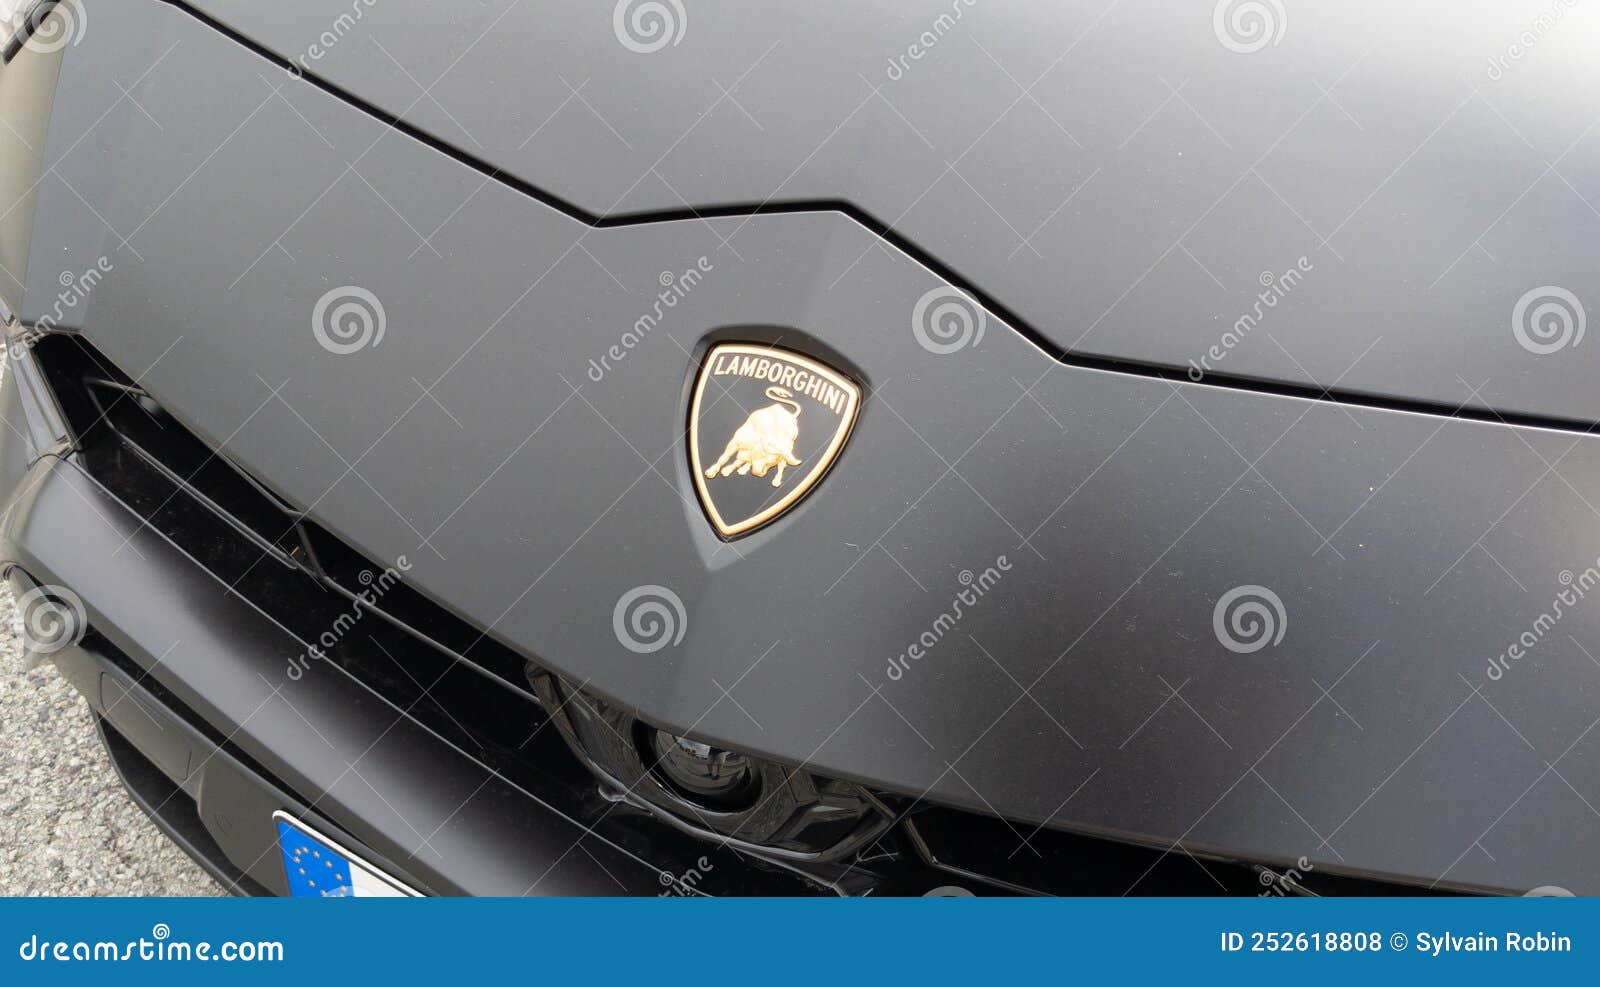 30,000+ Lamborghini Logo Pictures | Download Free Images on Unsplash